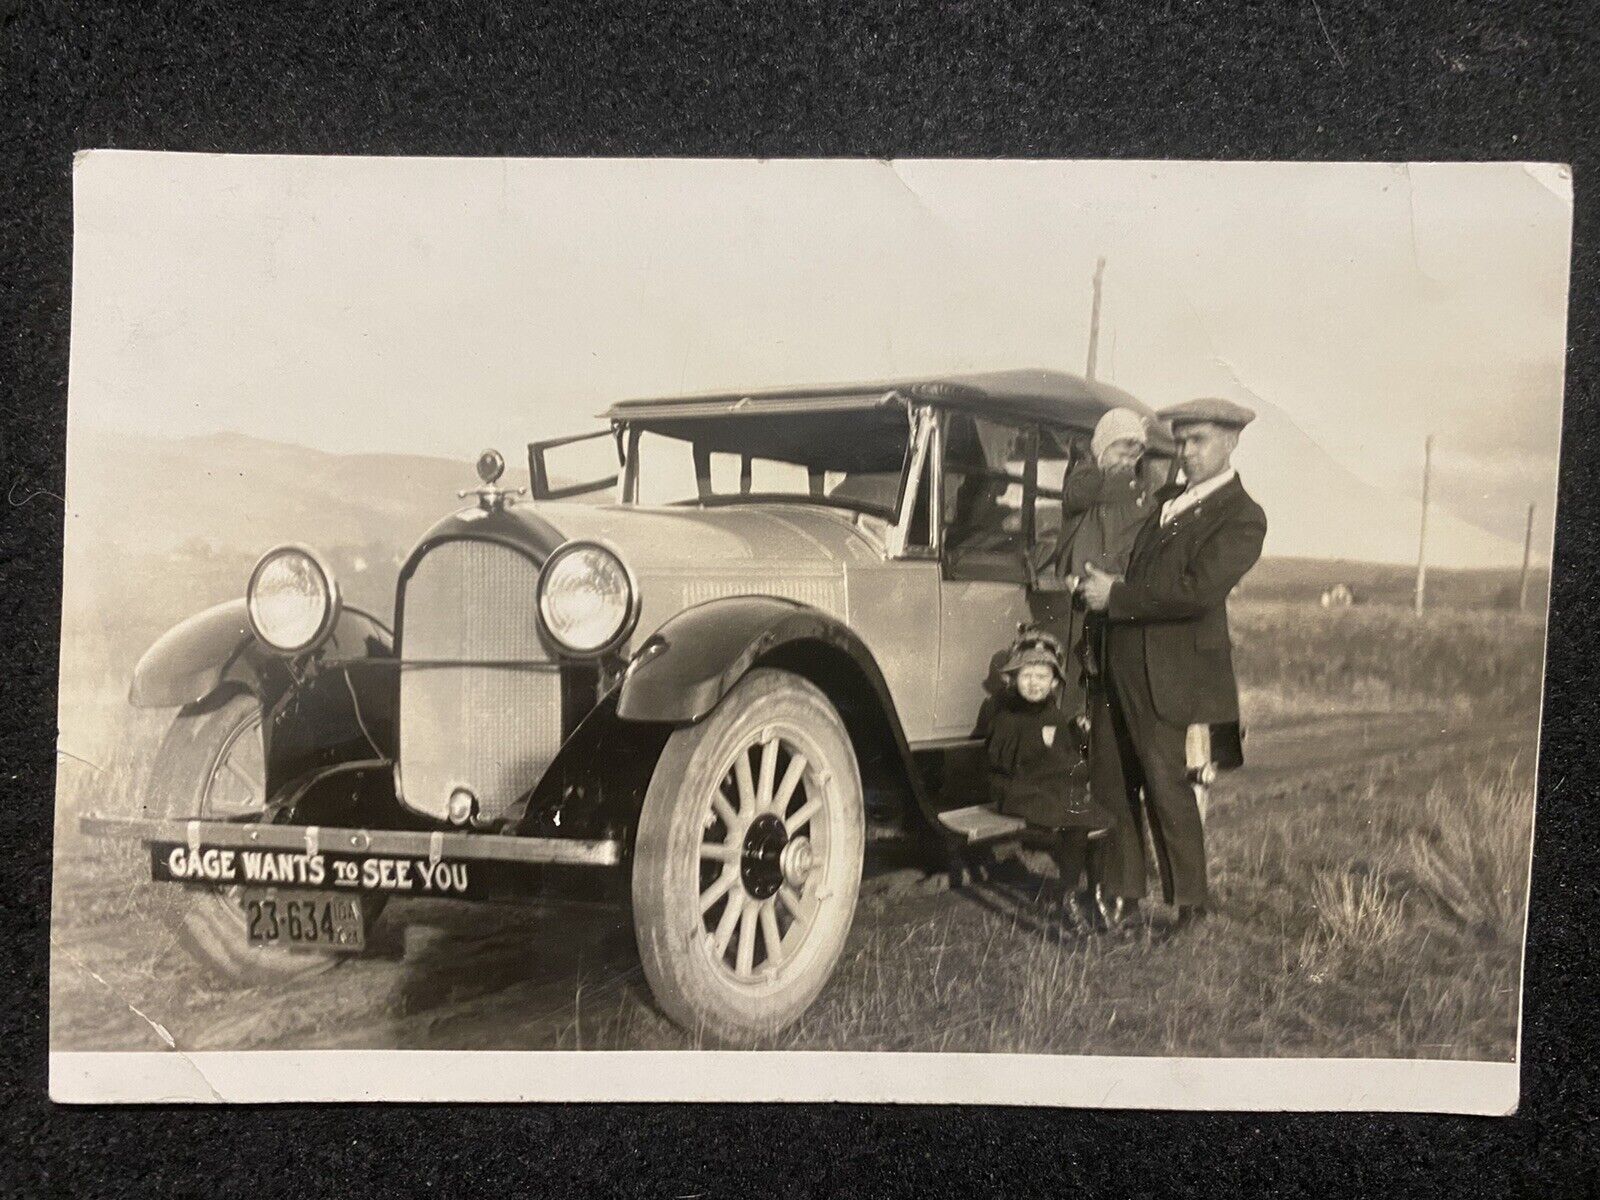 Idaho ID Automobile “Gage Wants To See You” 1923 Snapshot Photo